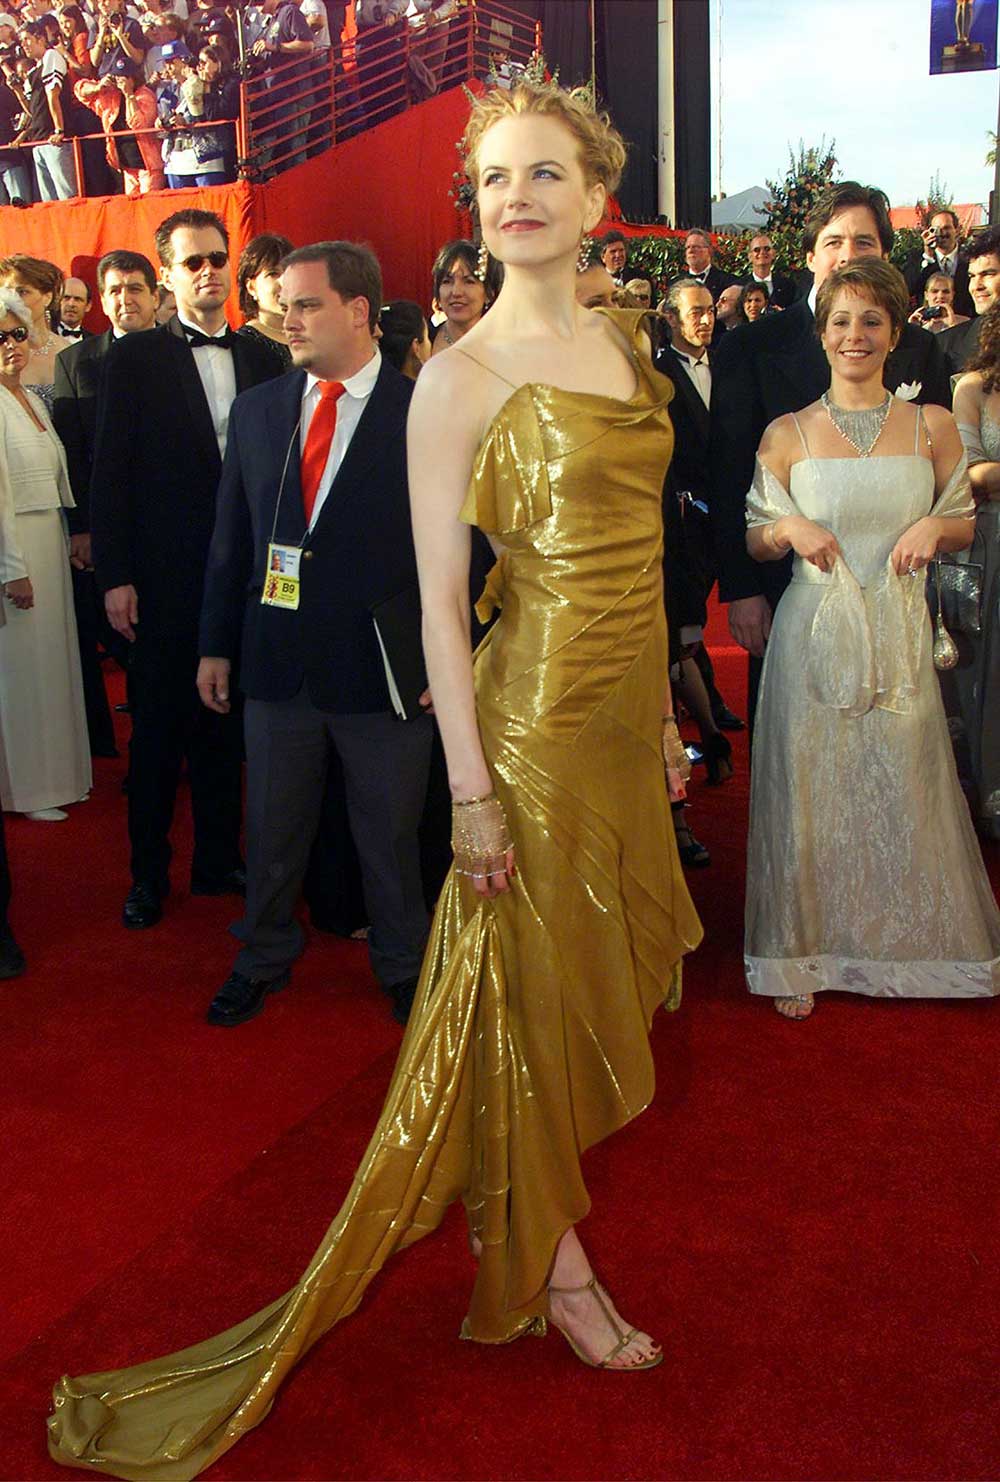 Nicole Kidman at the 2000 Academy Awards.